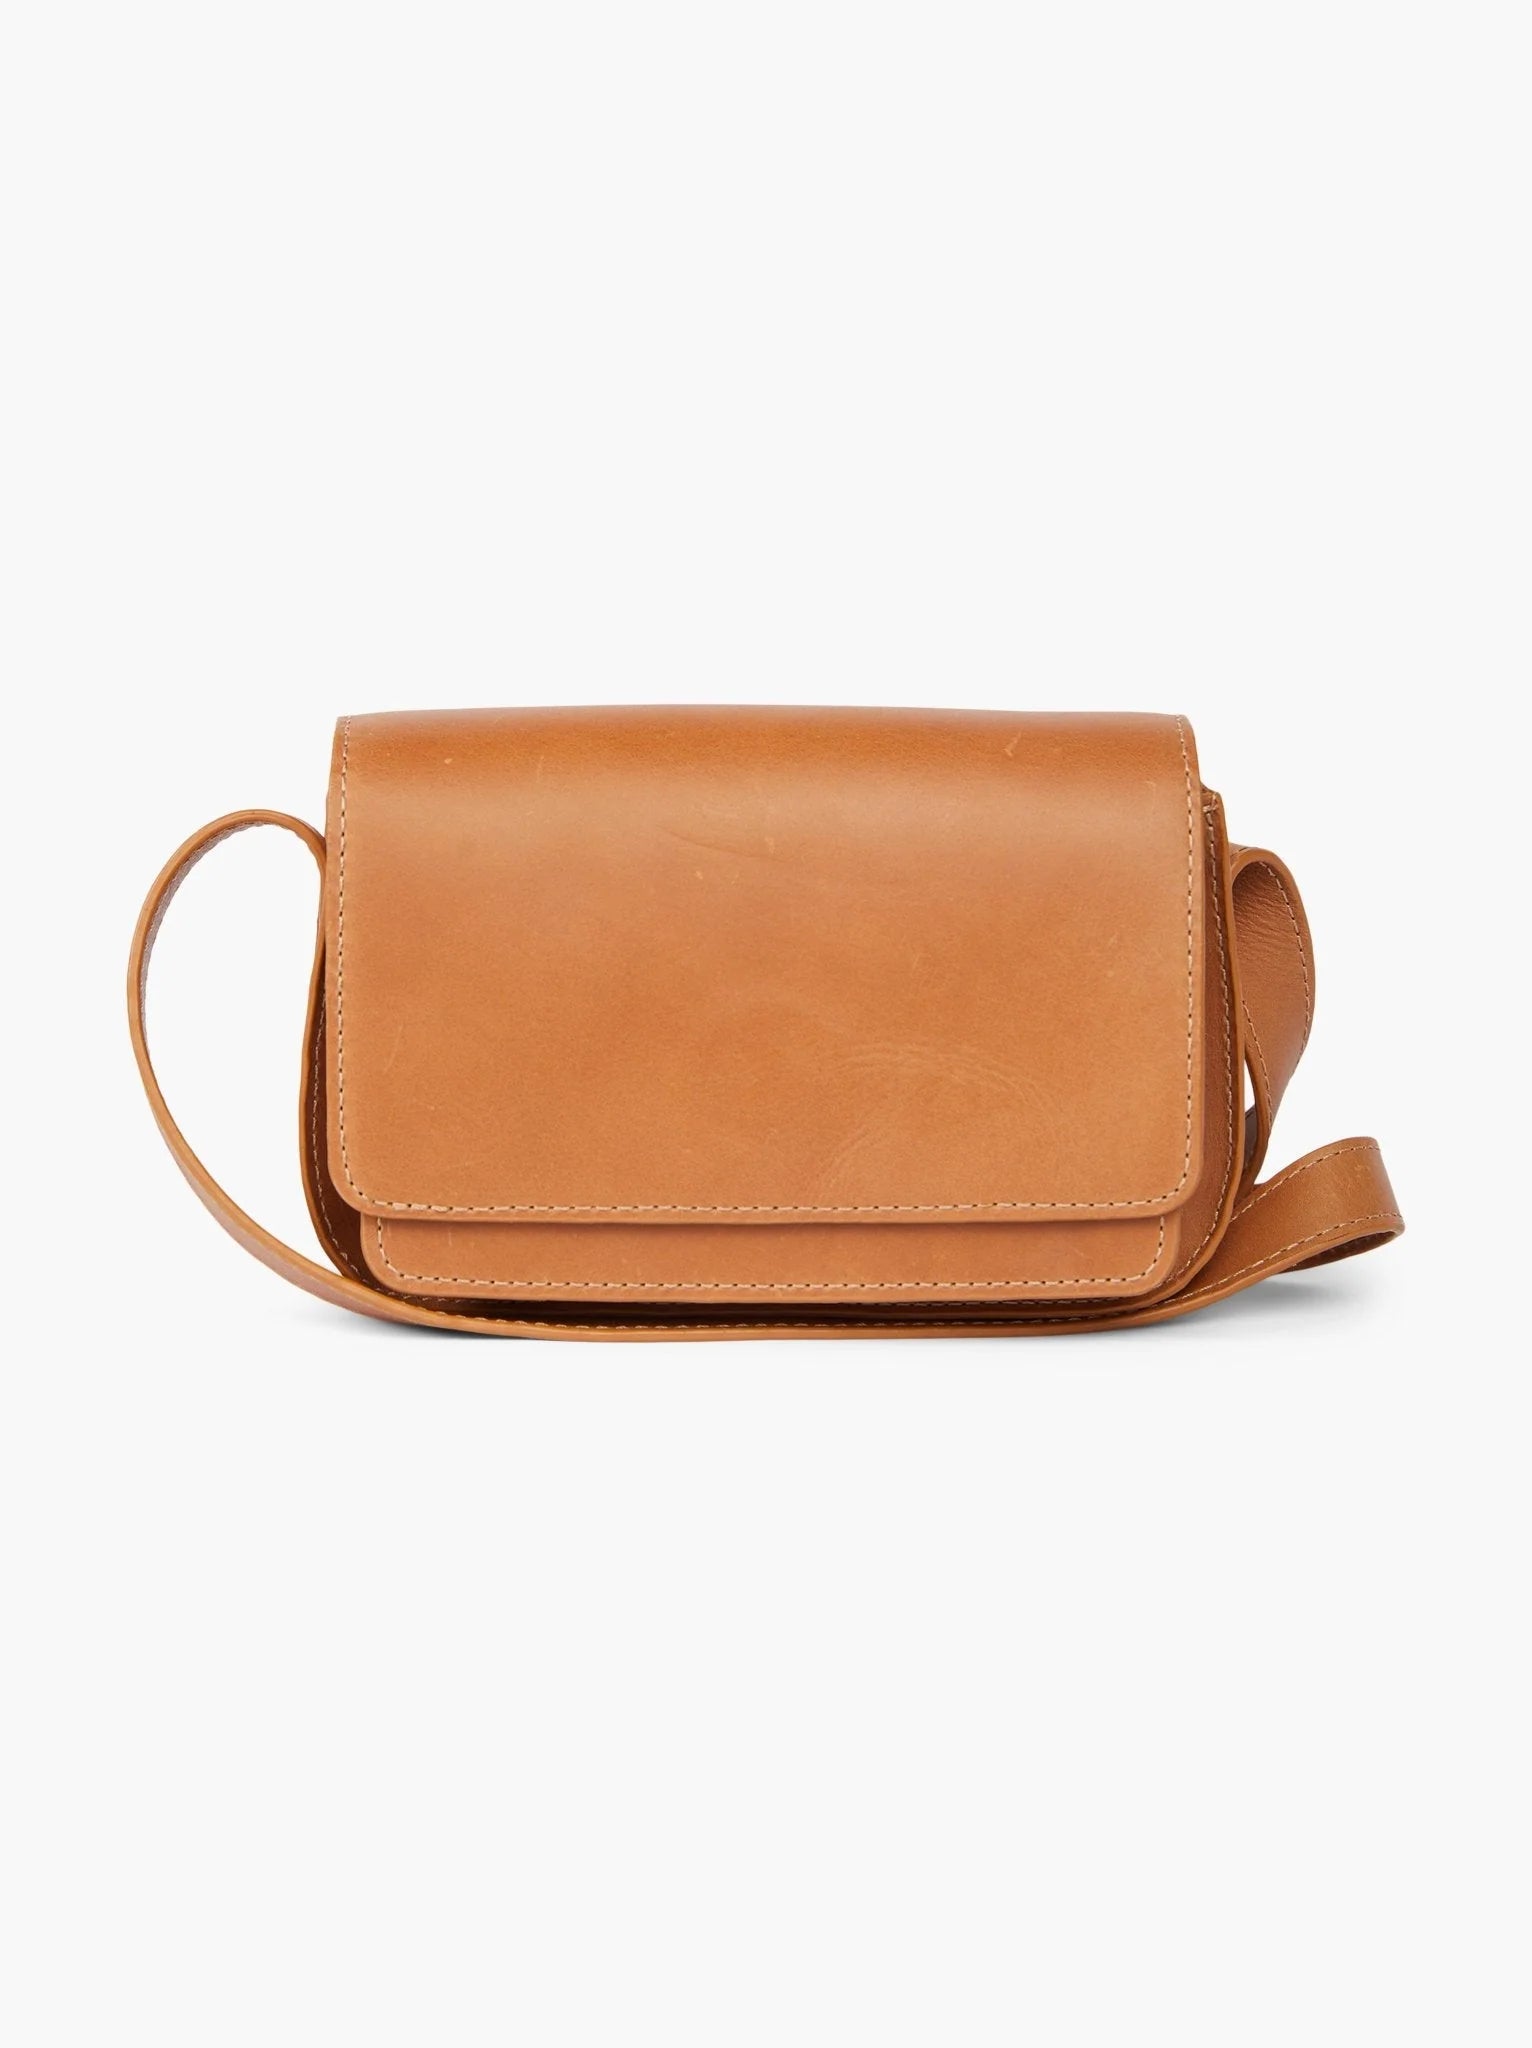 Gessi Leather Crossbody Handbag